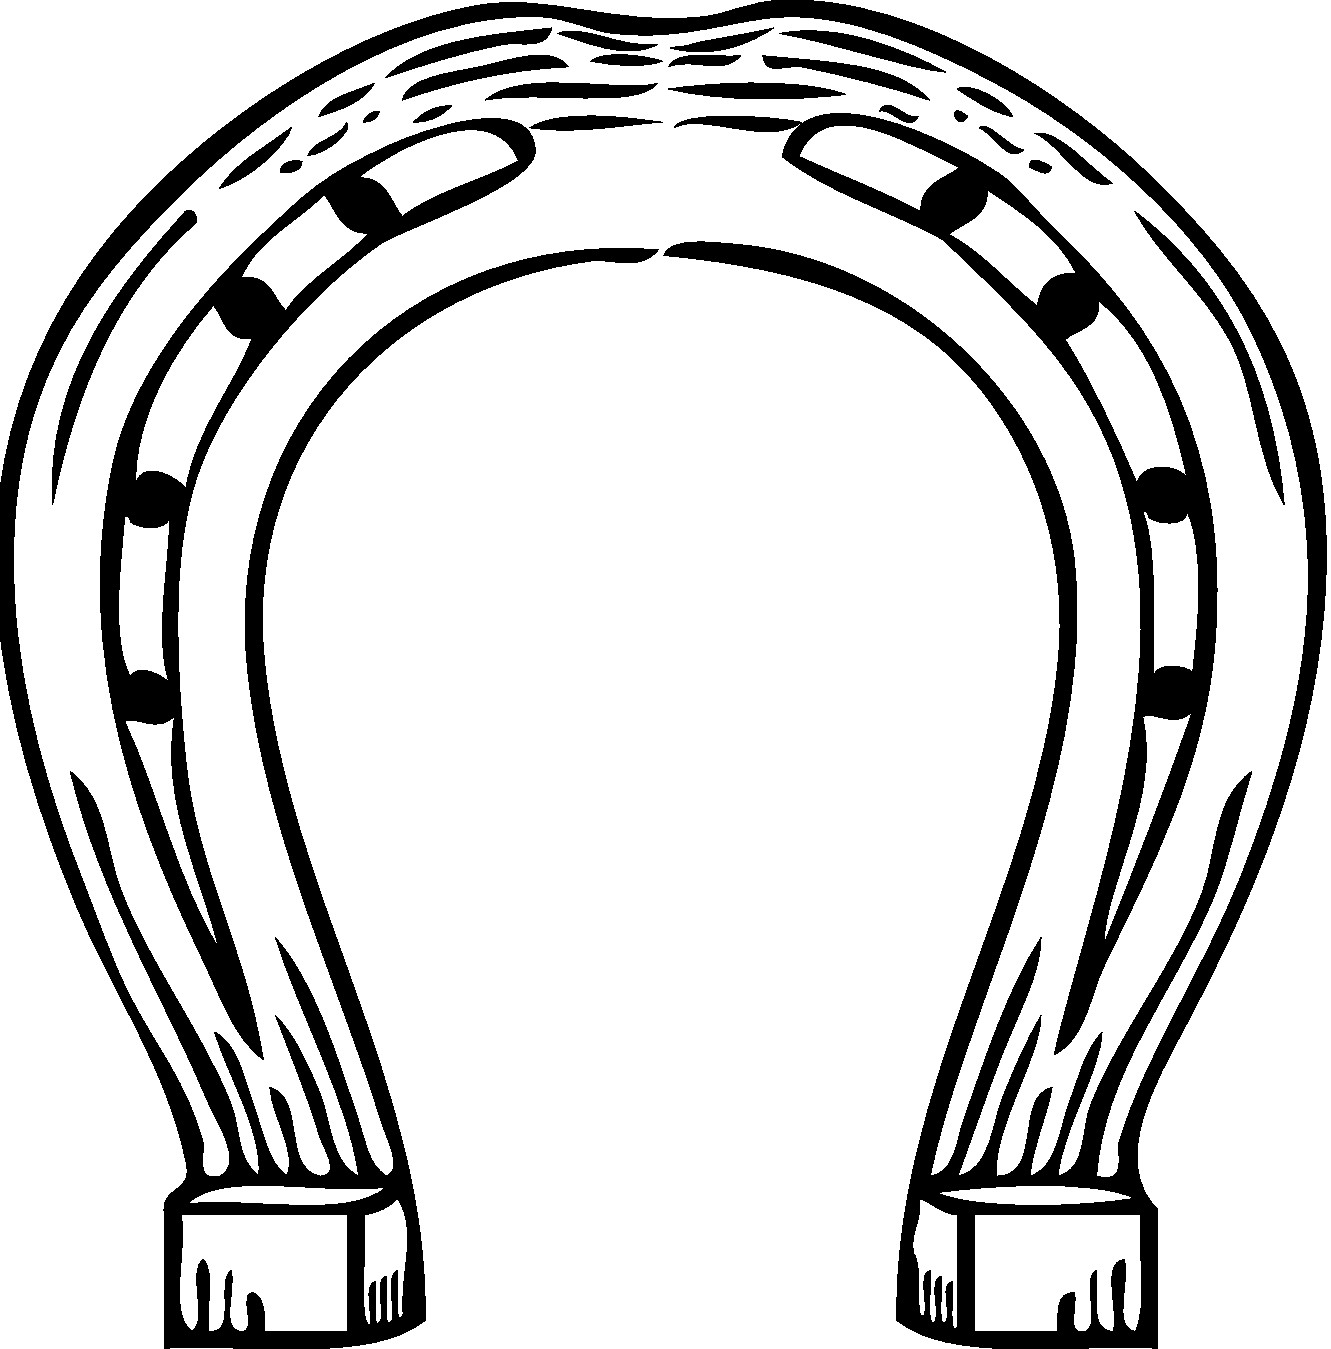 horseshoes-drawing-at-getdrawings-free-download